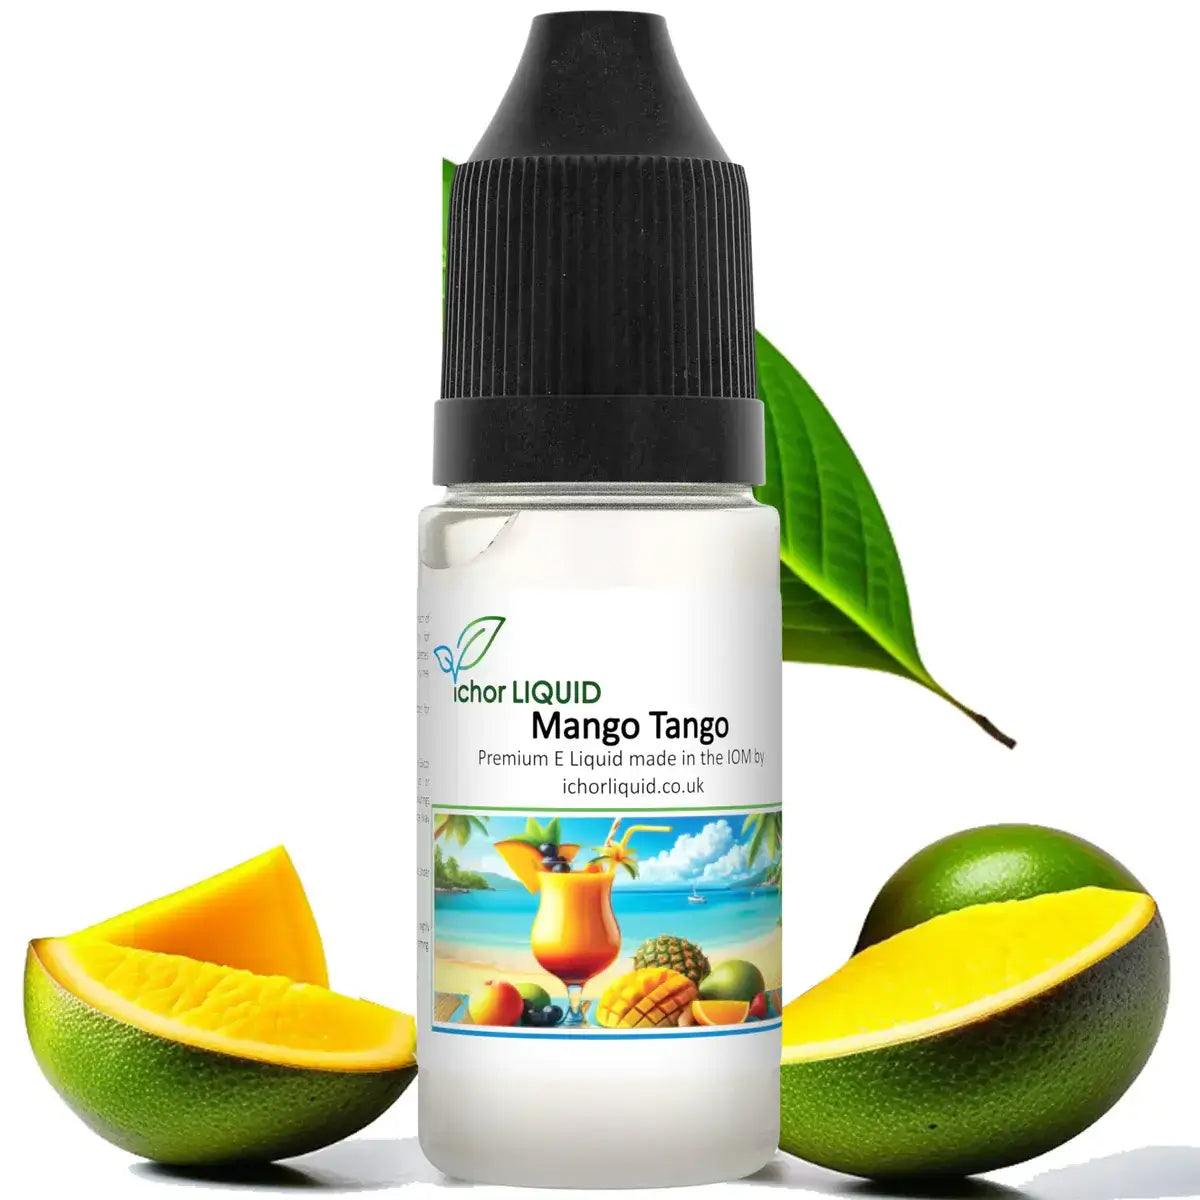 Mango Tango E Liquid